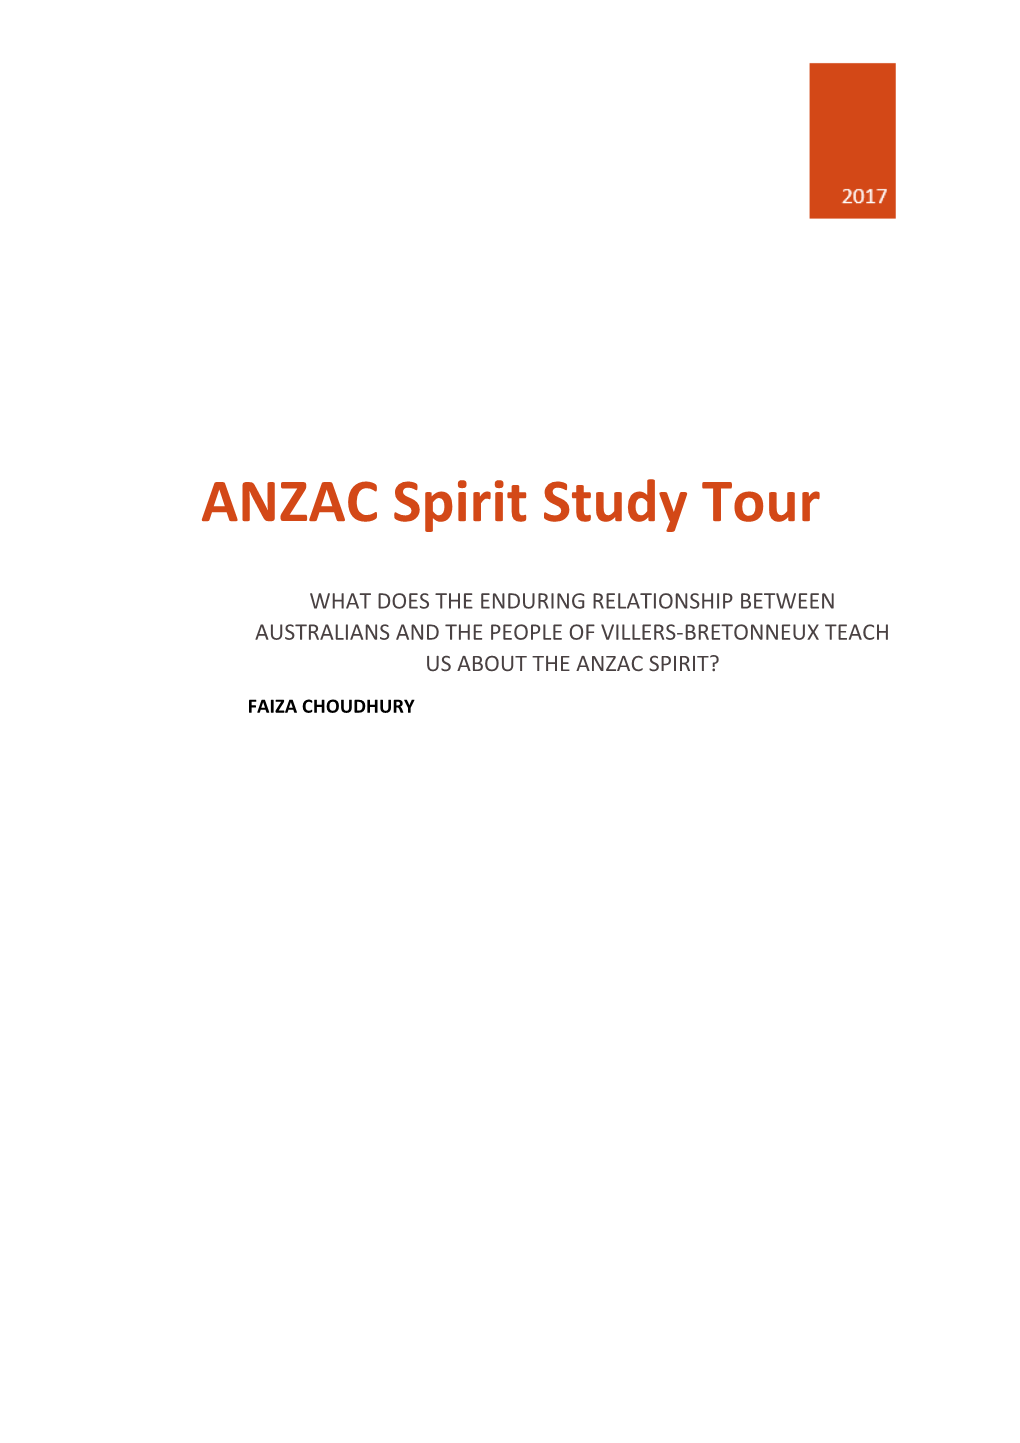 ANZAC Spirit Study Tour L Faiza Choudhury